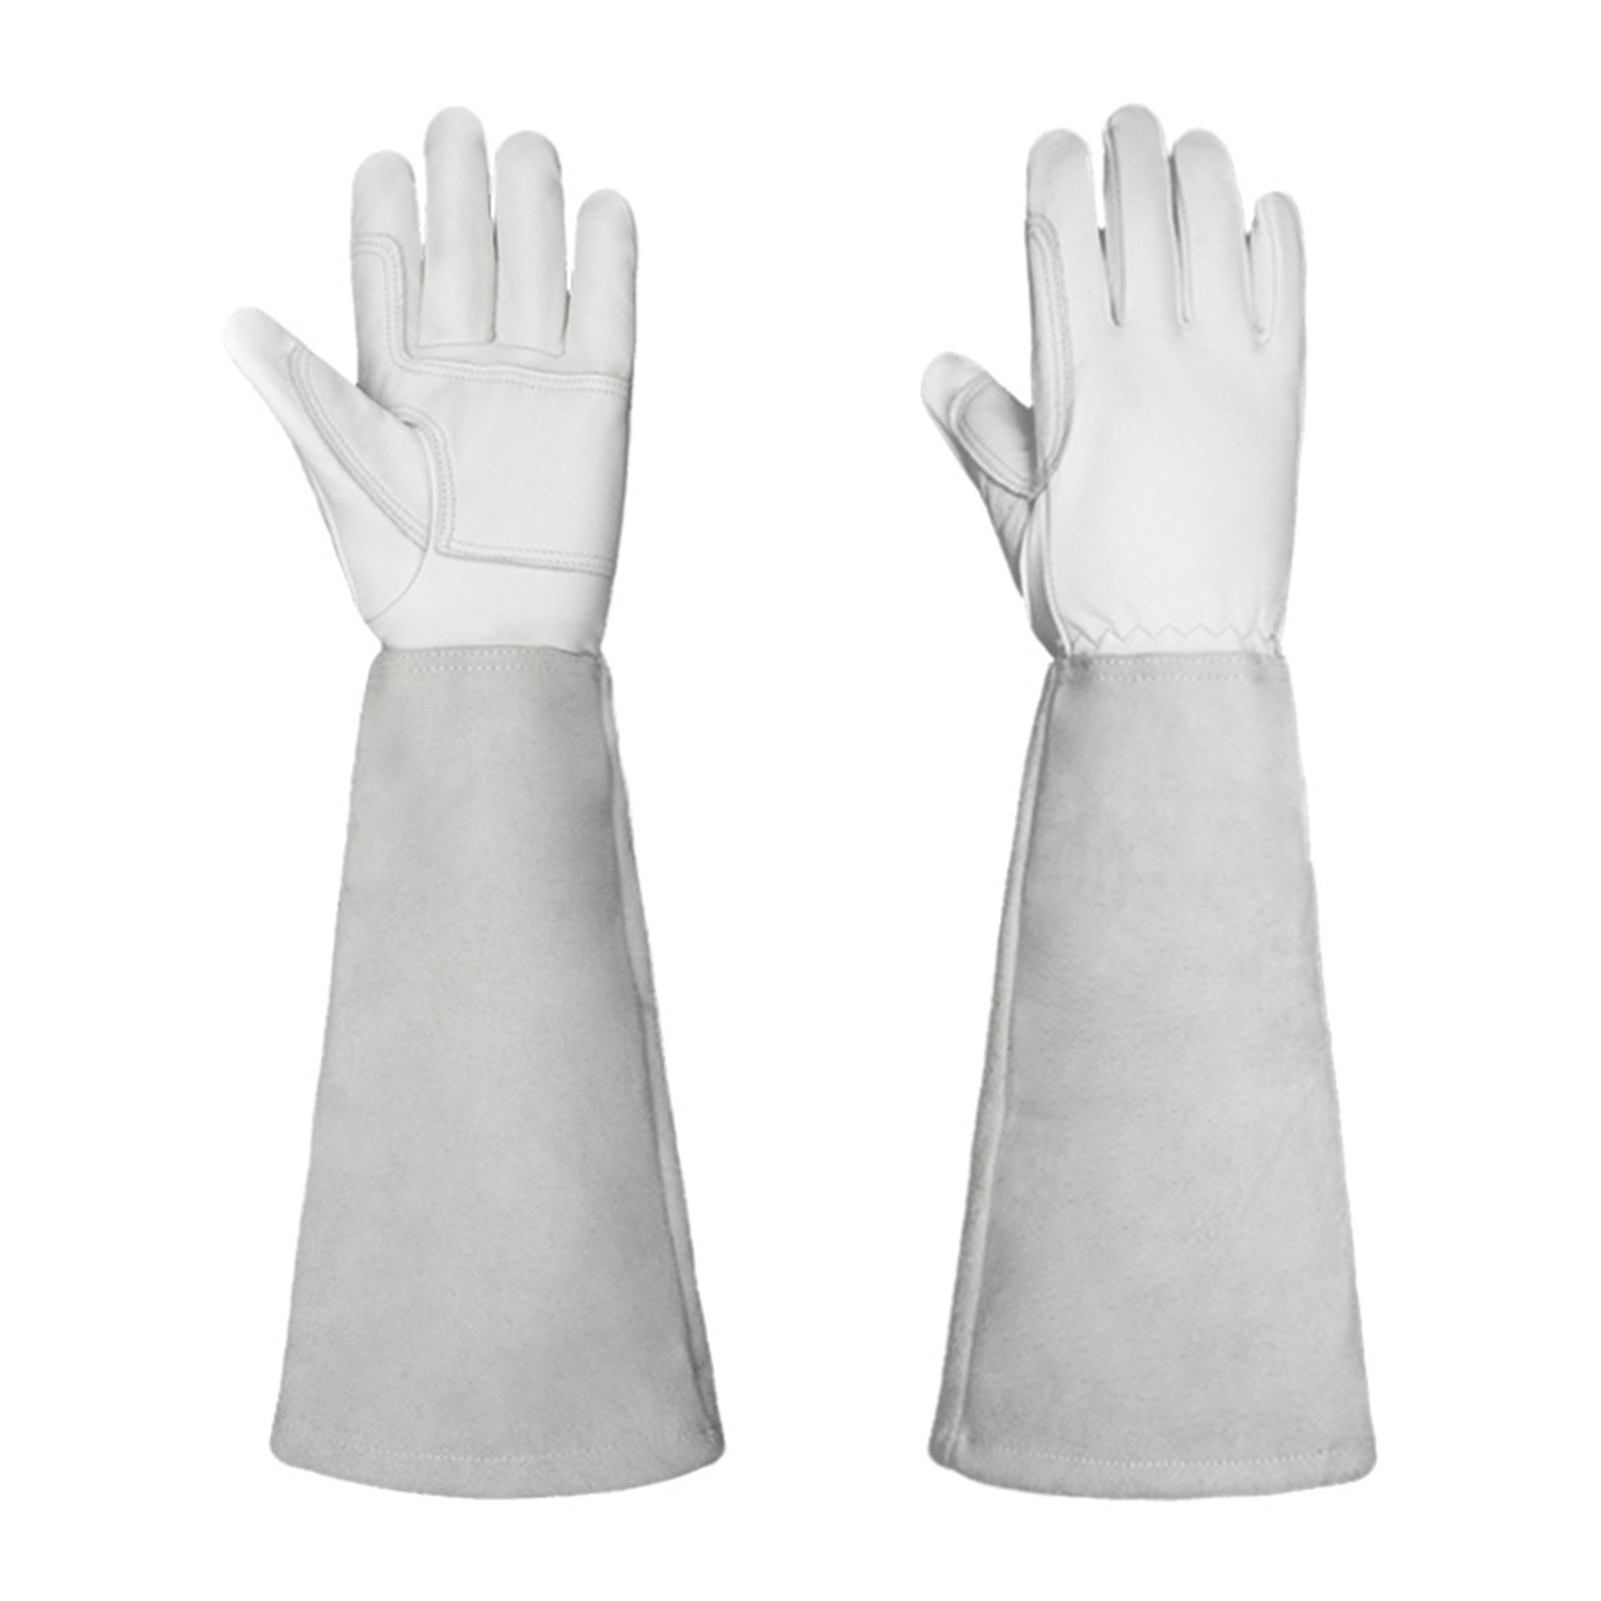 Rose Pruning Gardening Gloves Yard Men Women Wear Resistant Long Sleeve